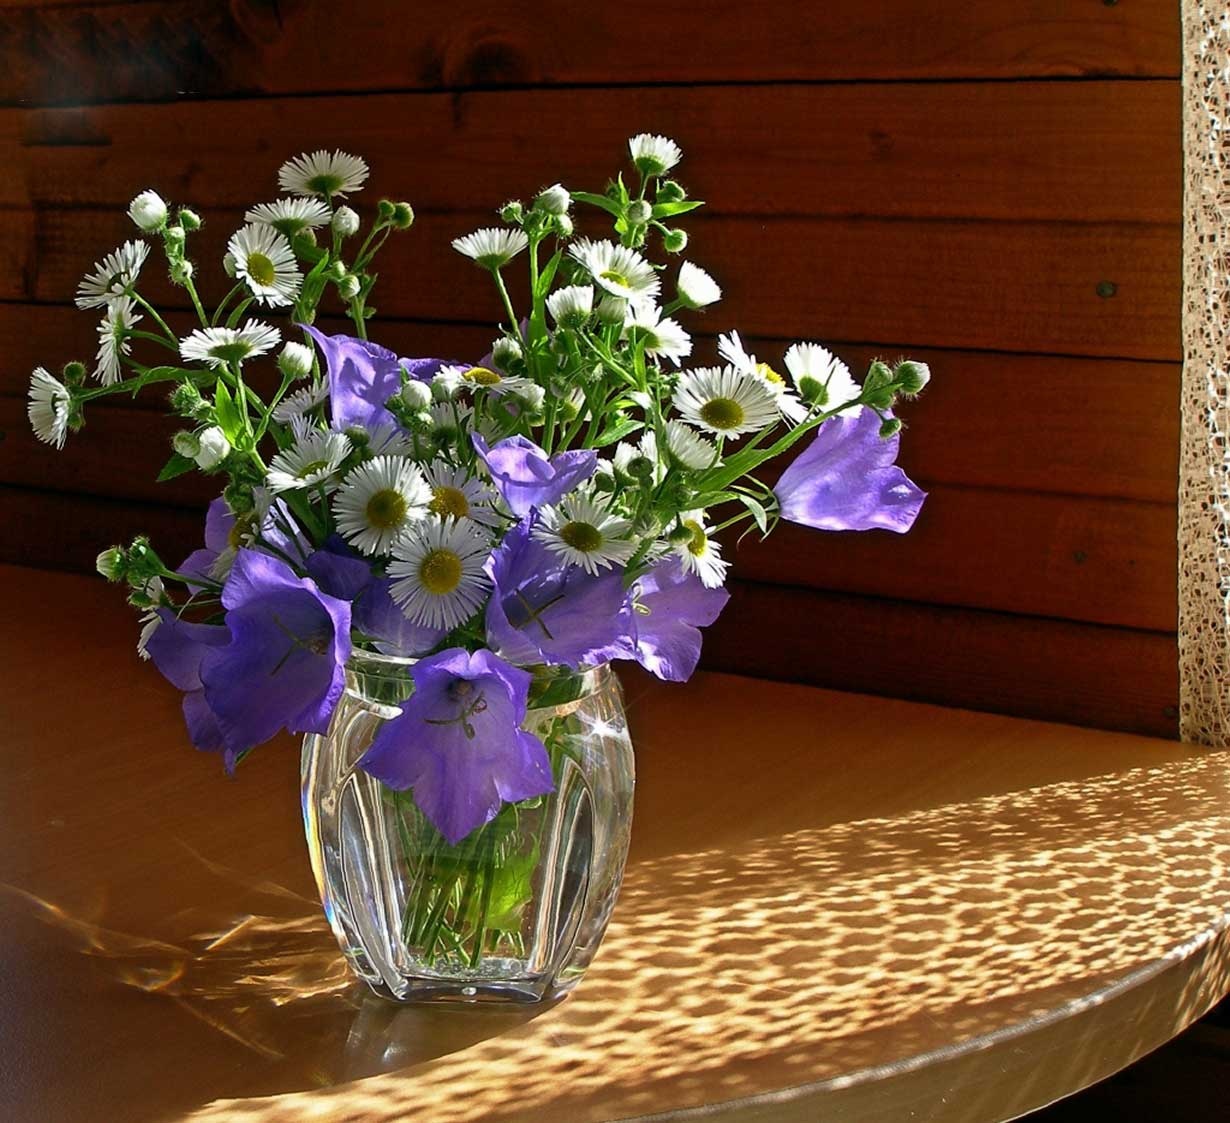 Image result for ?گل های بسیار زیبا در گلدان های زیبا?‎